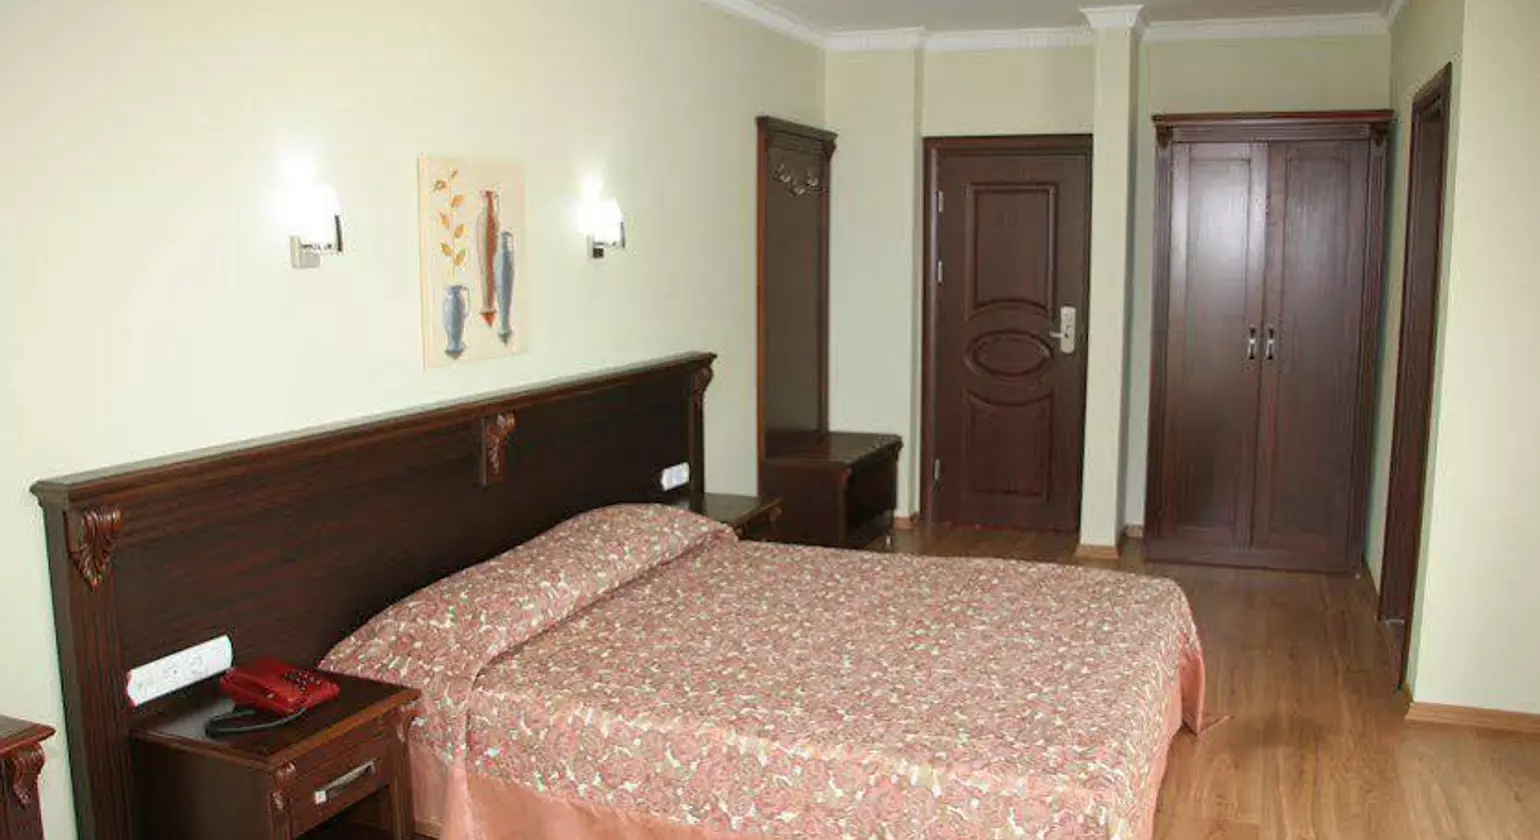 Alkan Hotel